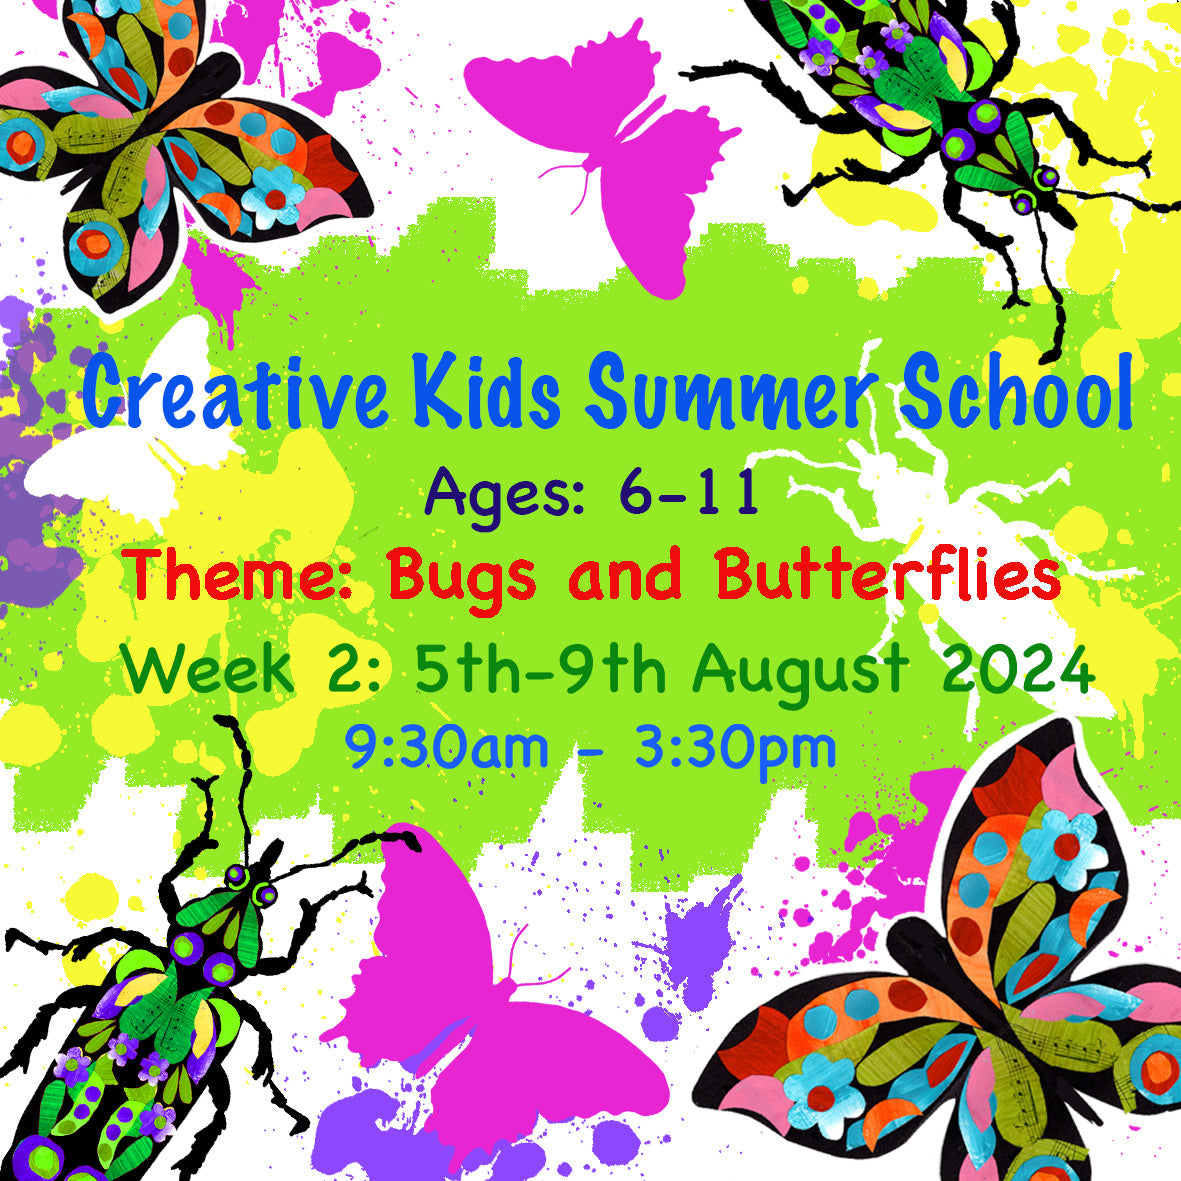 5th-9th August 2024 Creative kids summer school Week 2 theme BUGS AND BUTTERFLIES.